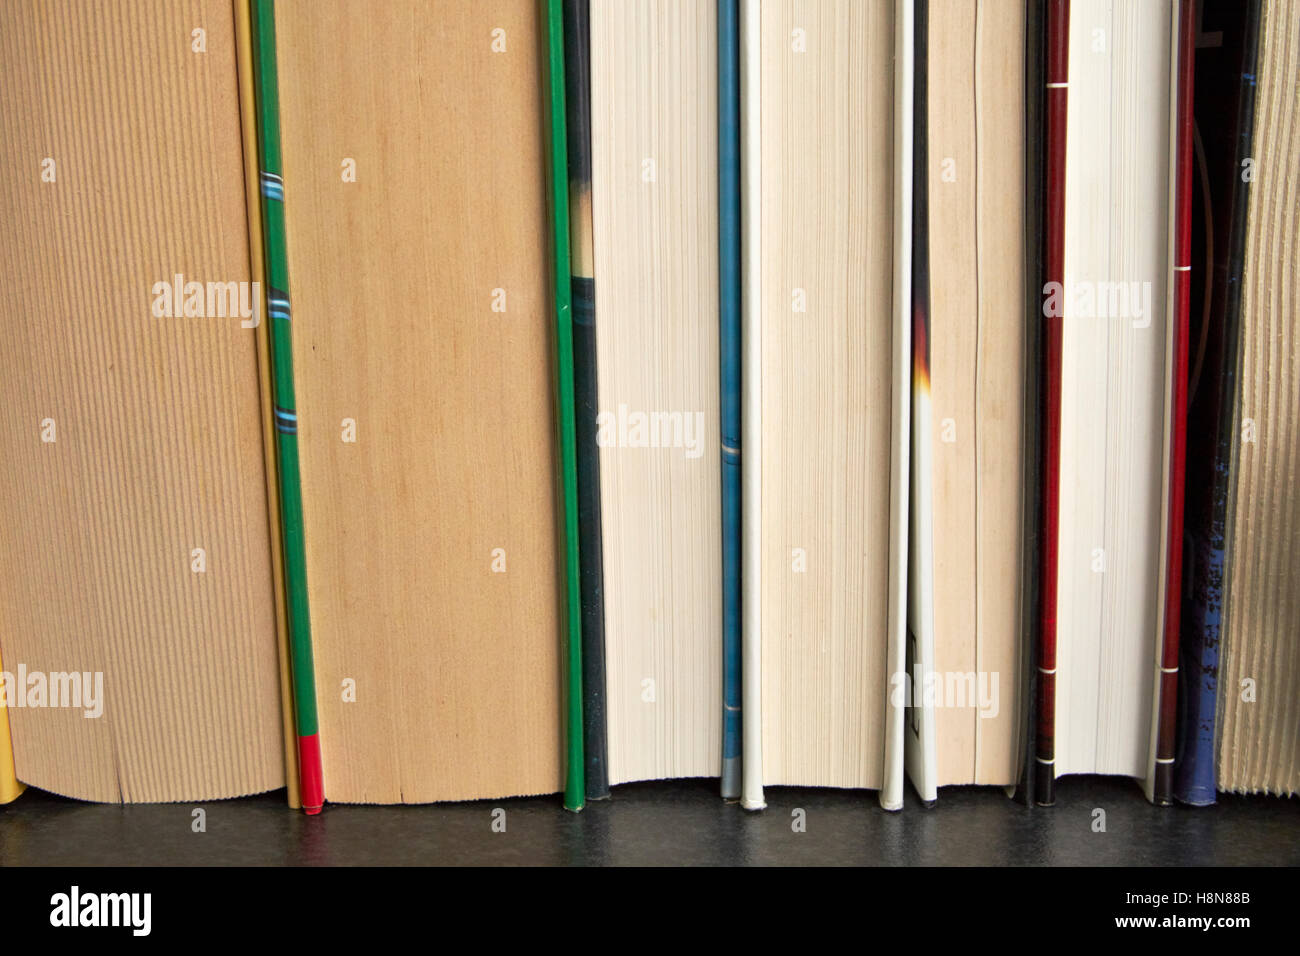 row of used hardback books in the uk Stock Photo